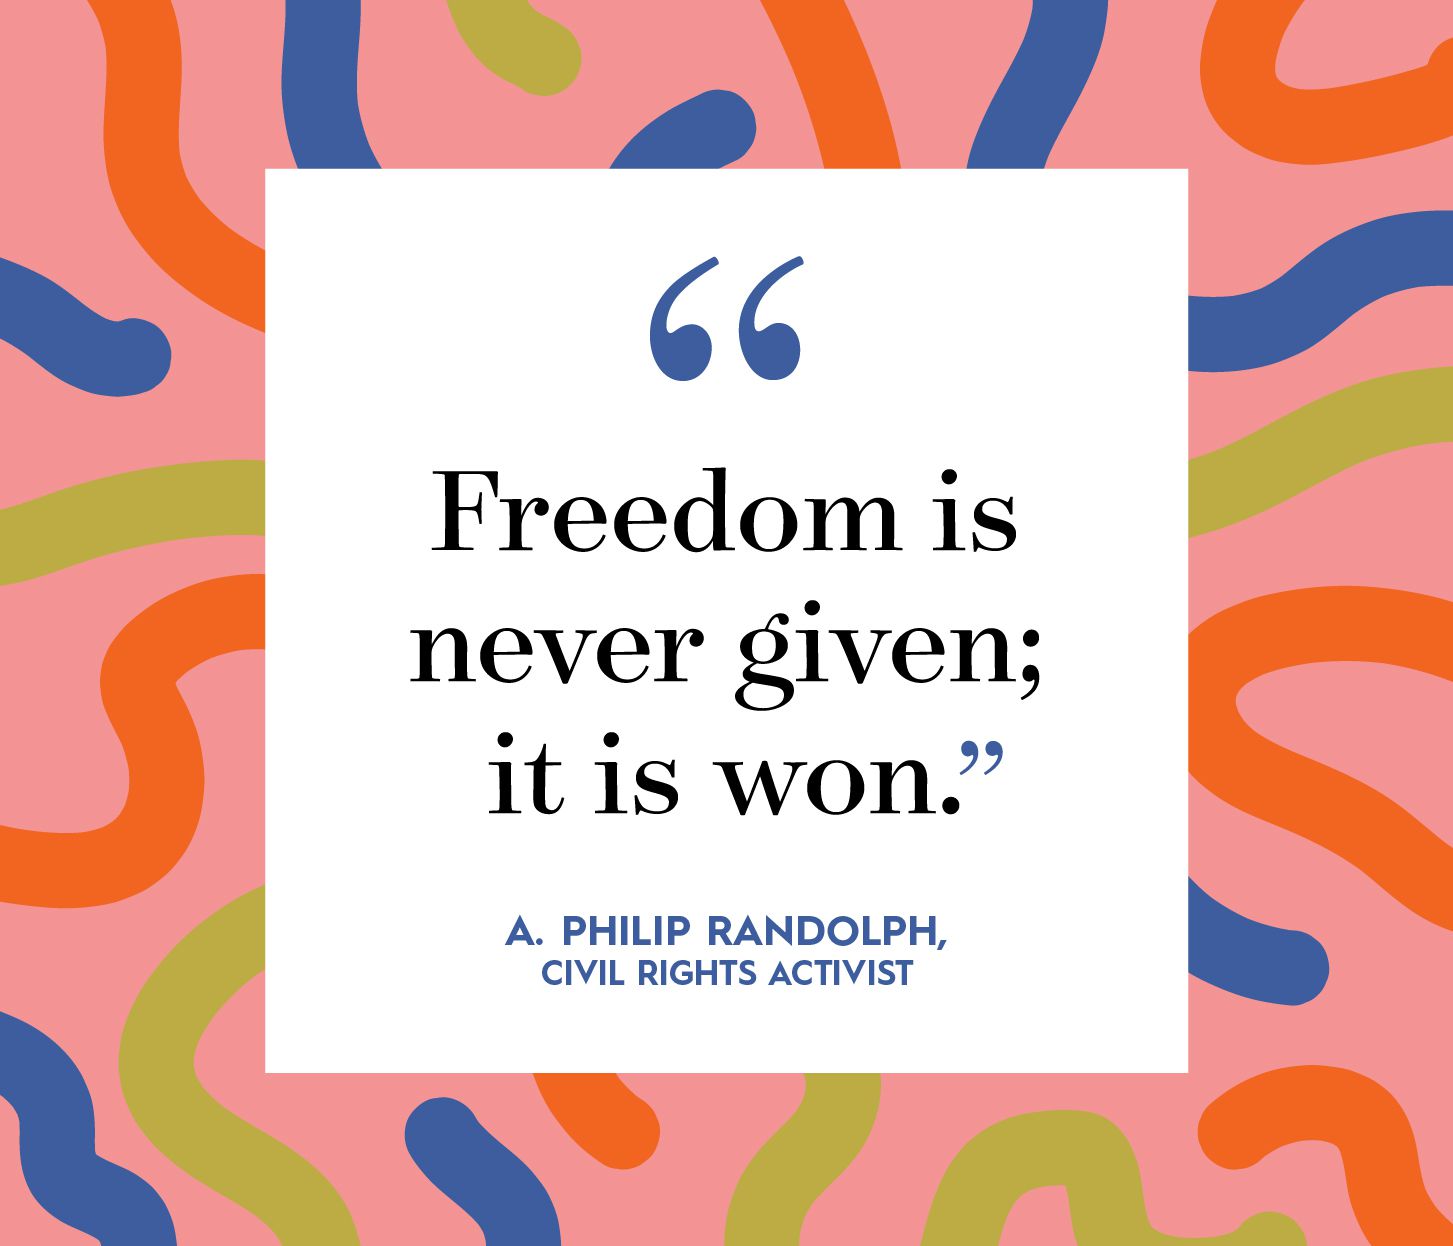 a philip randolph quote on multicolor background